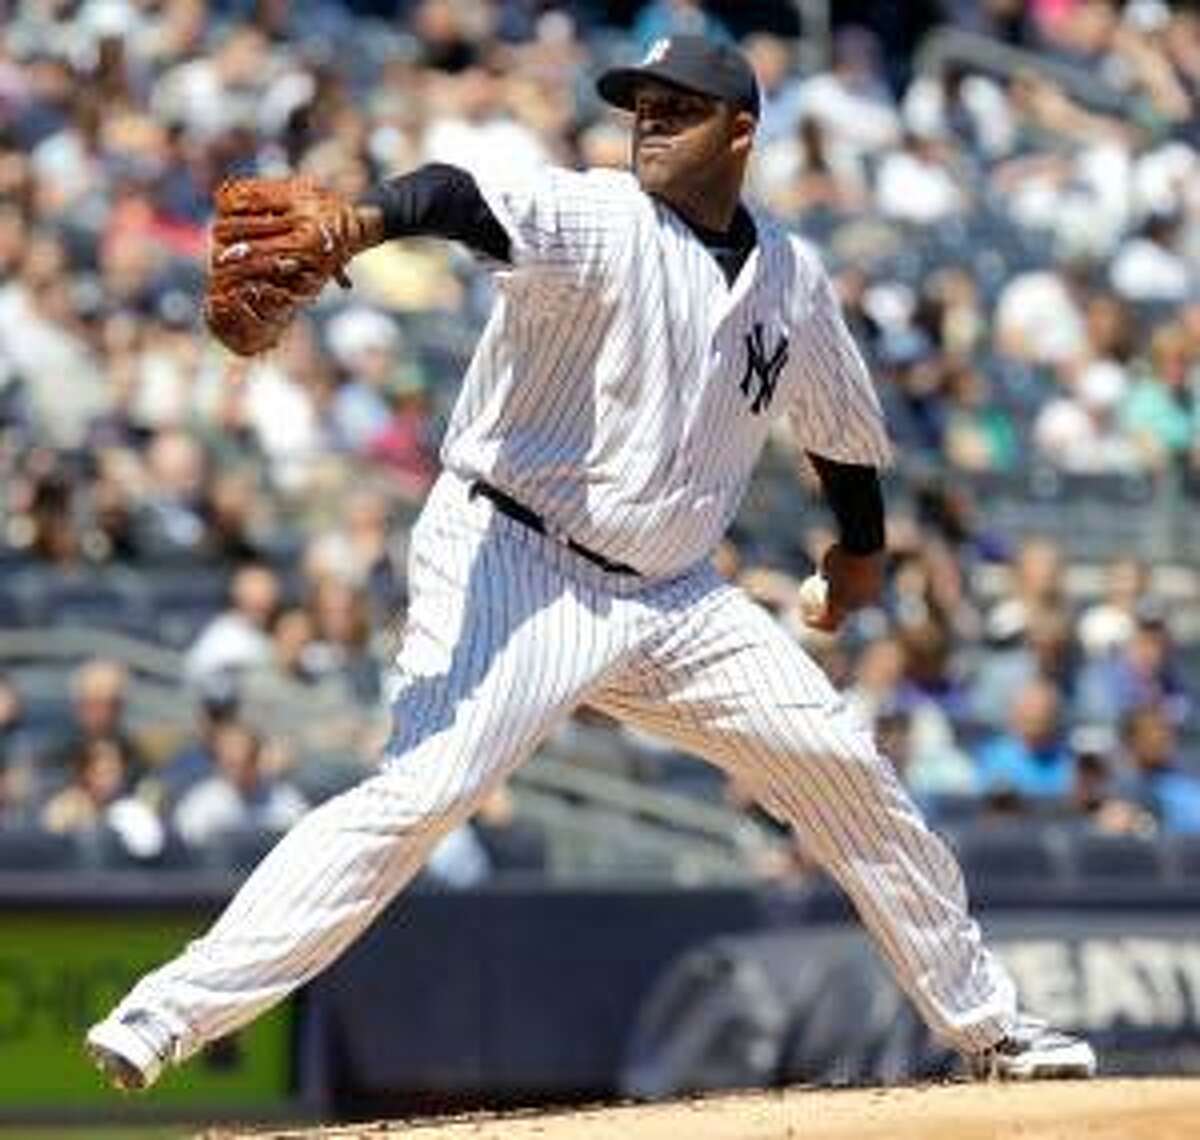 CC Sabathia Retirement: Yankees Starter Reveals 'Next Year Will be